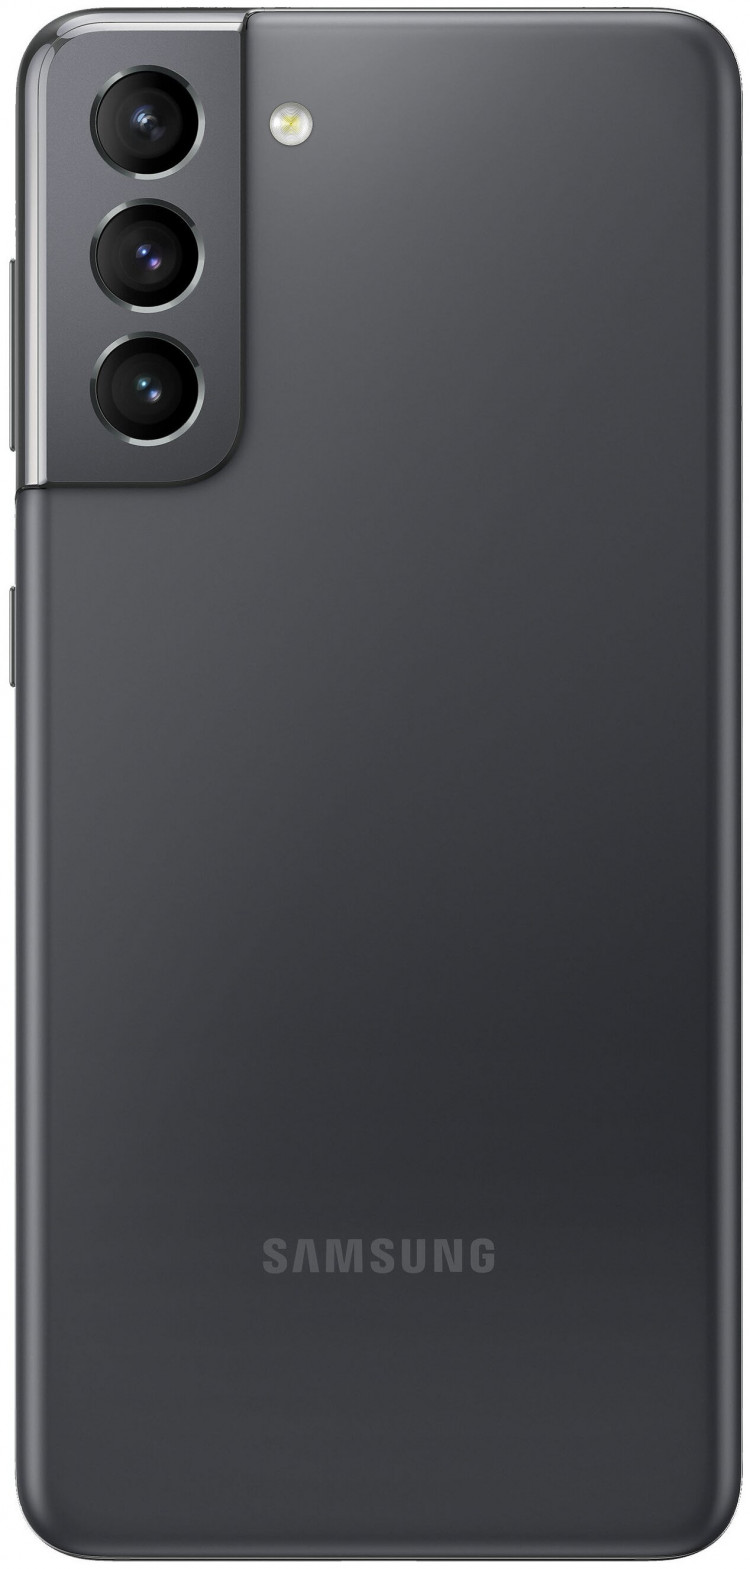 Samsung Galaxy S21 Серый фантом Ростест (EAC)